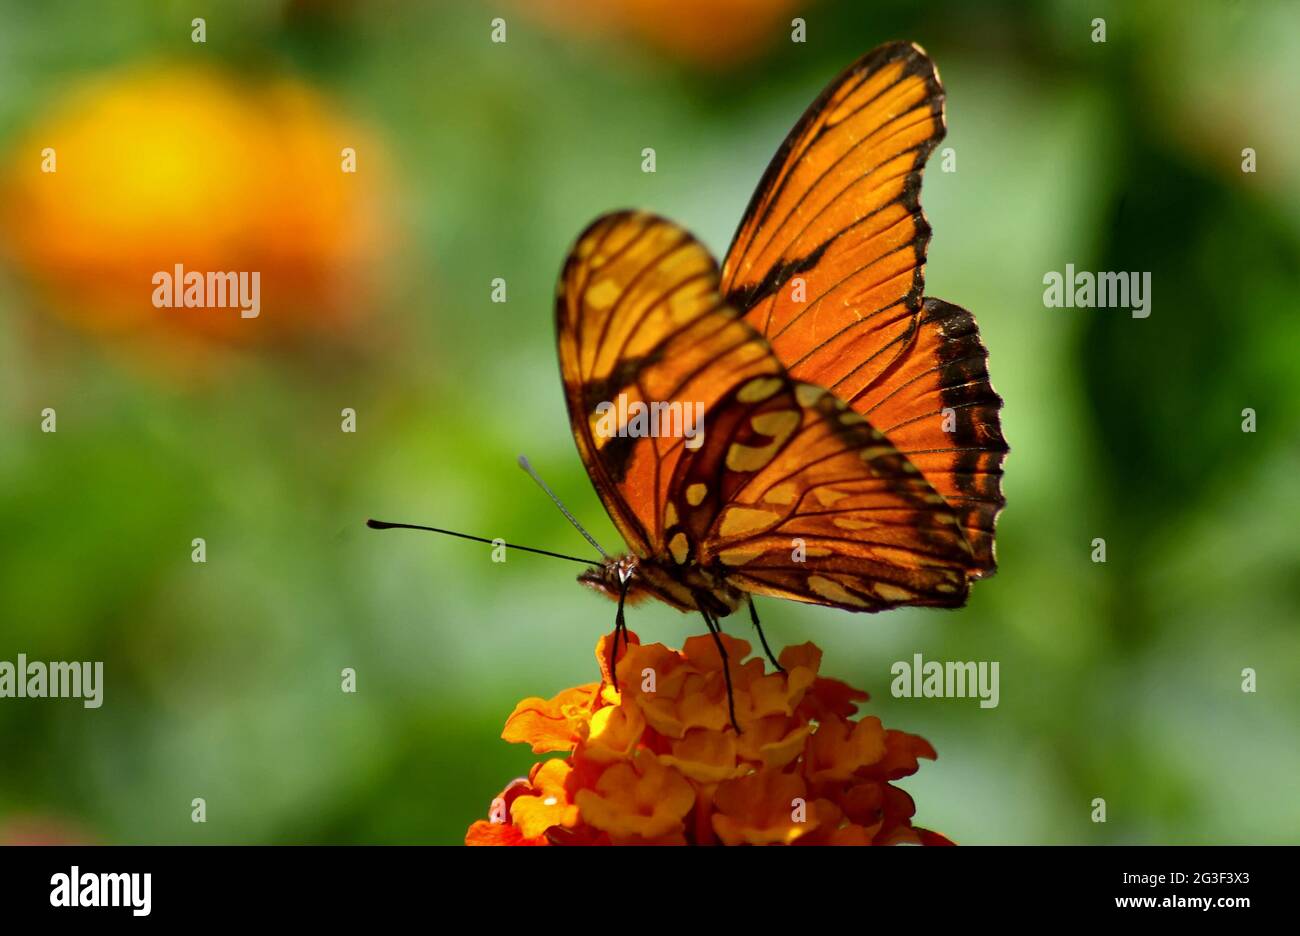 Danaus plexippus - Monarch butterfly Stock Photo